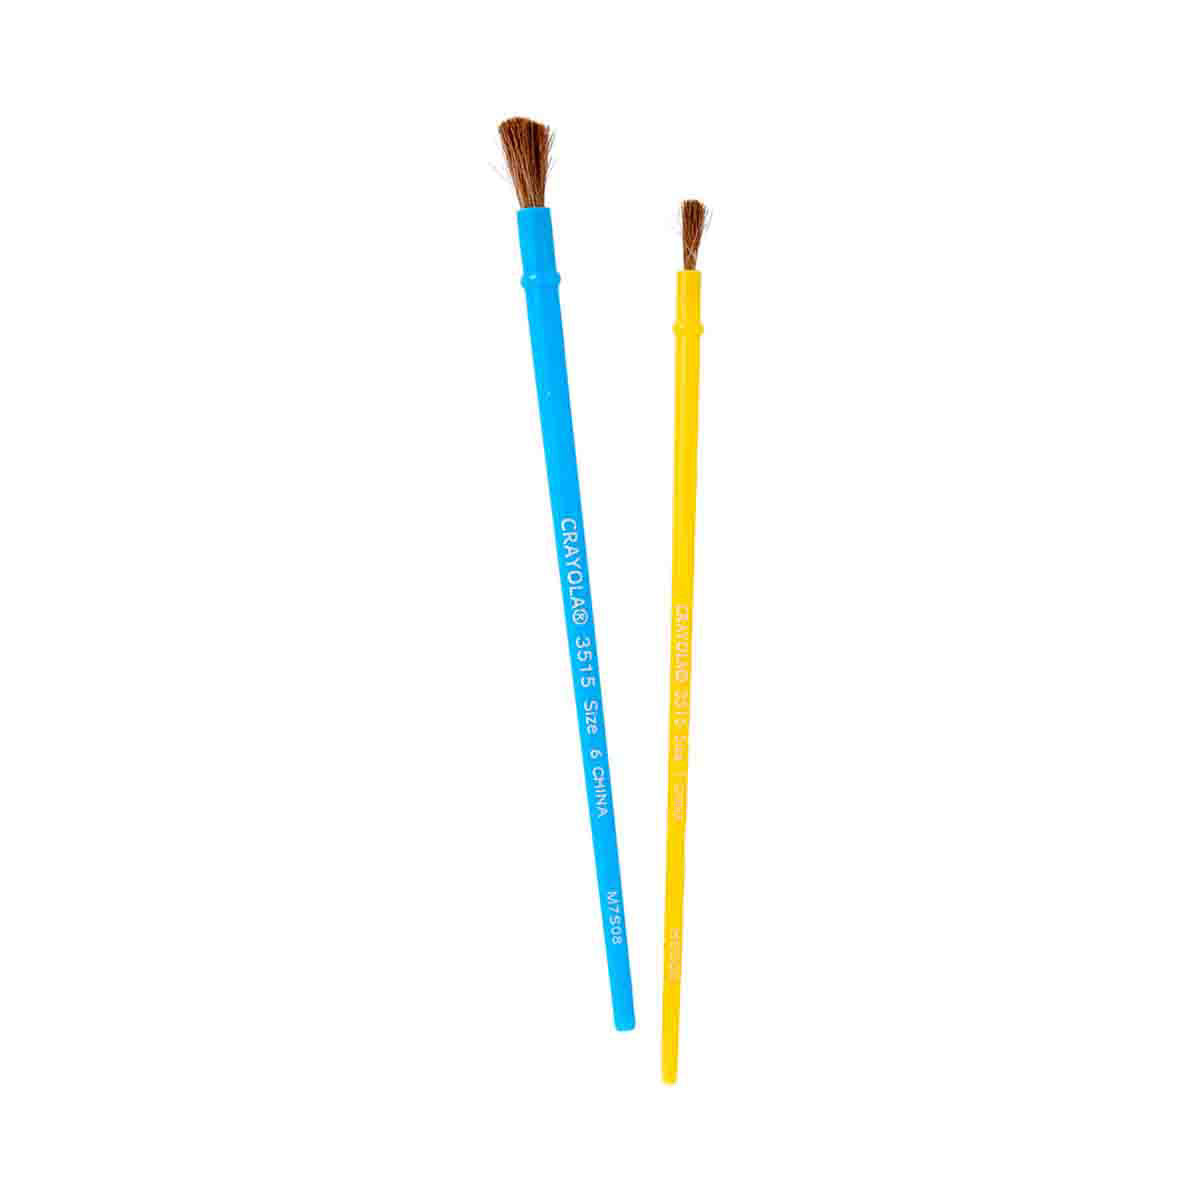 12 Packs: 5 ct. (60 total) Crayola® Art & Craft Brushes